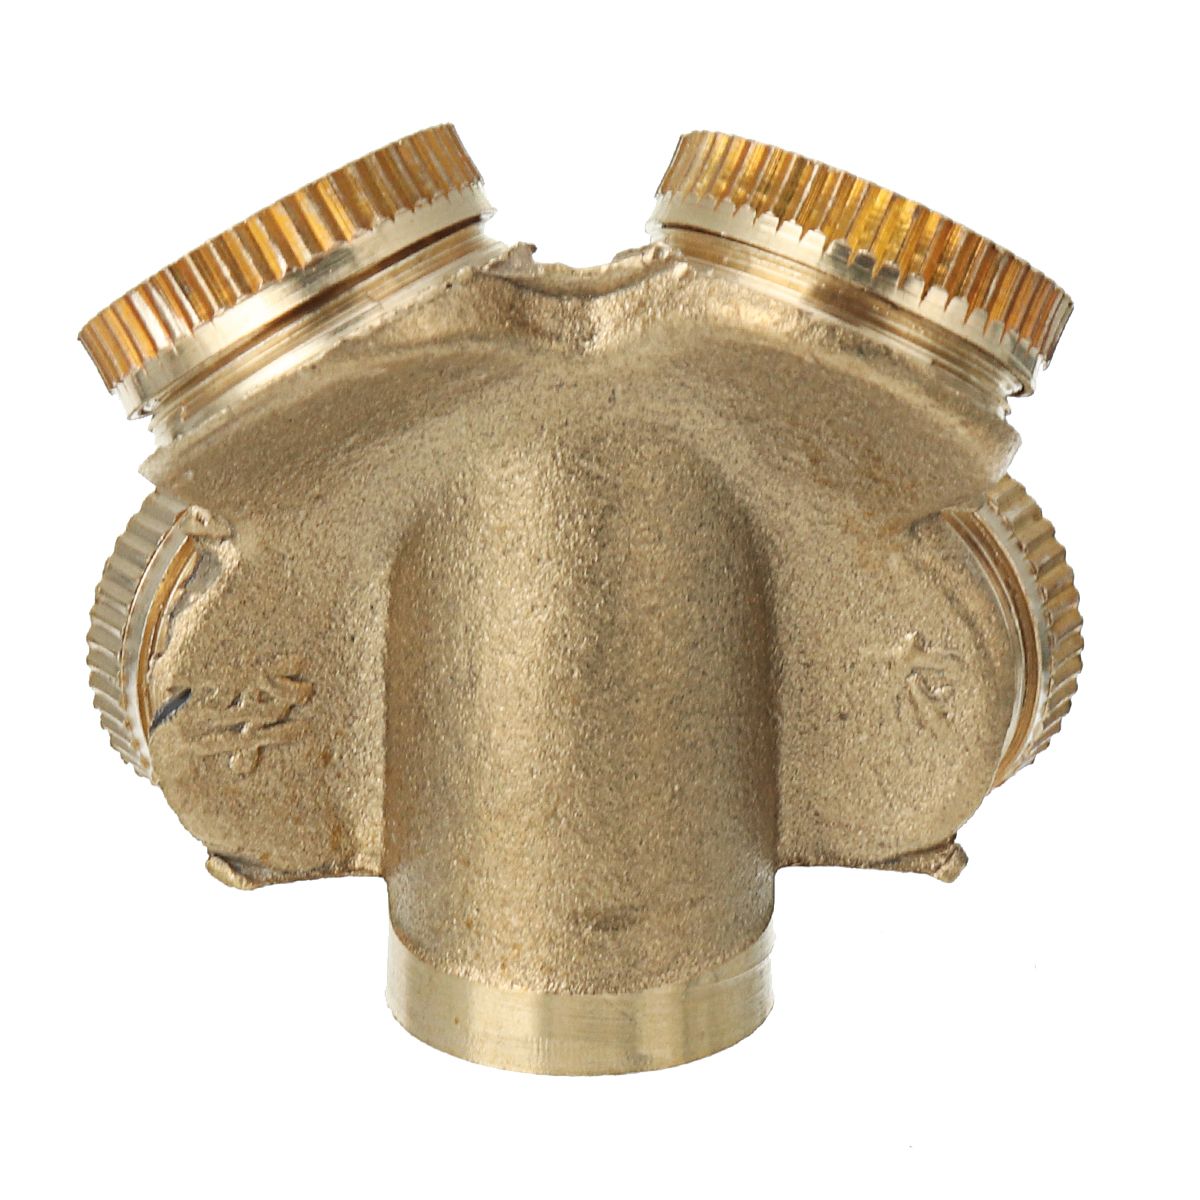 4-Hole-Brass-Spray-Misting-Nozzle-Garden-Sprinkler-Irrigation-Fitting-Adjustable-1685437